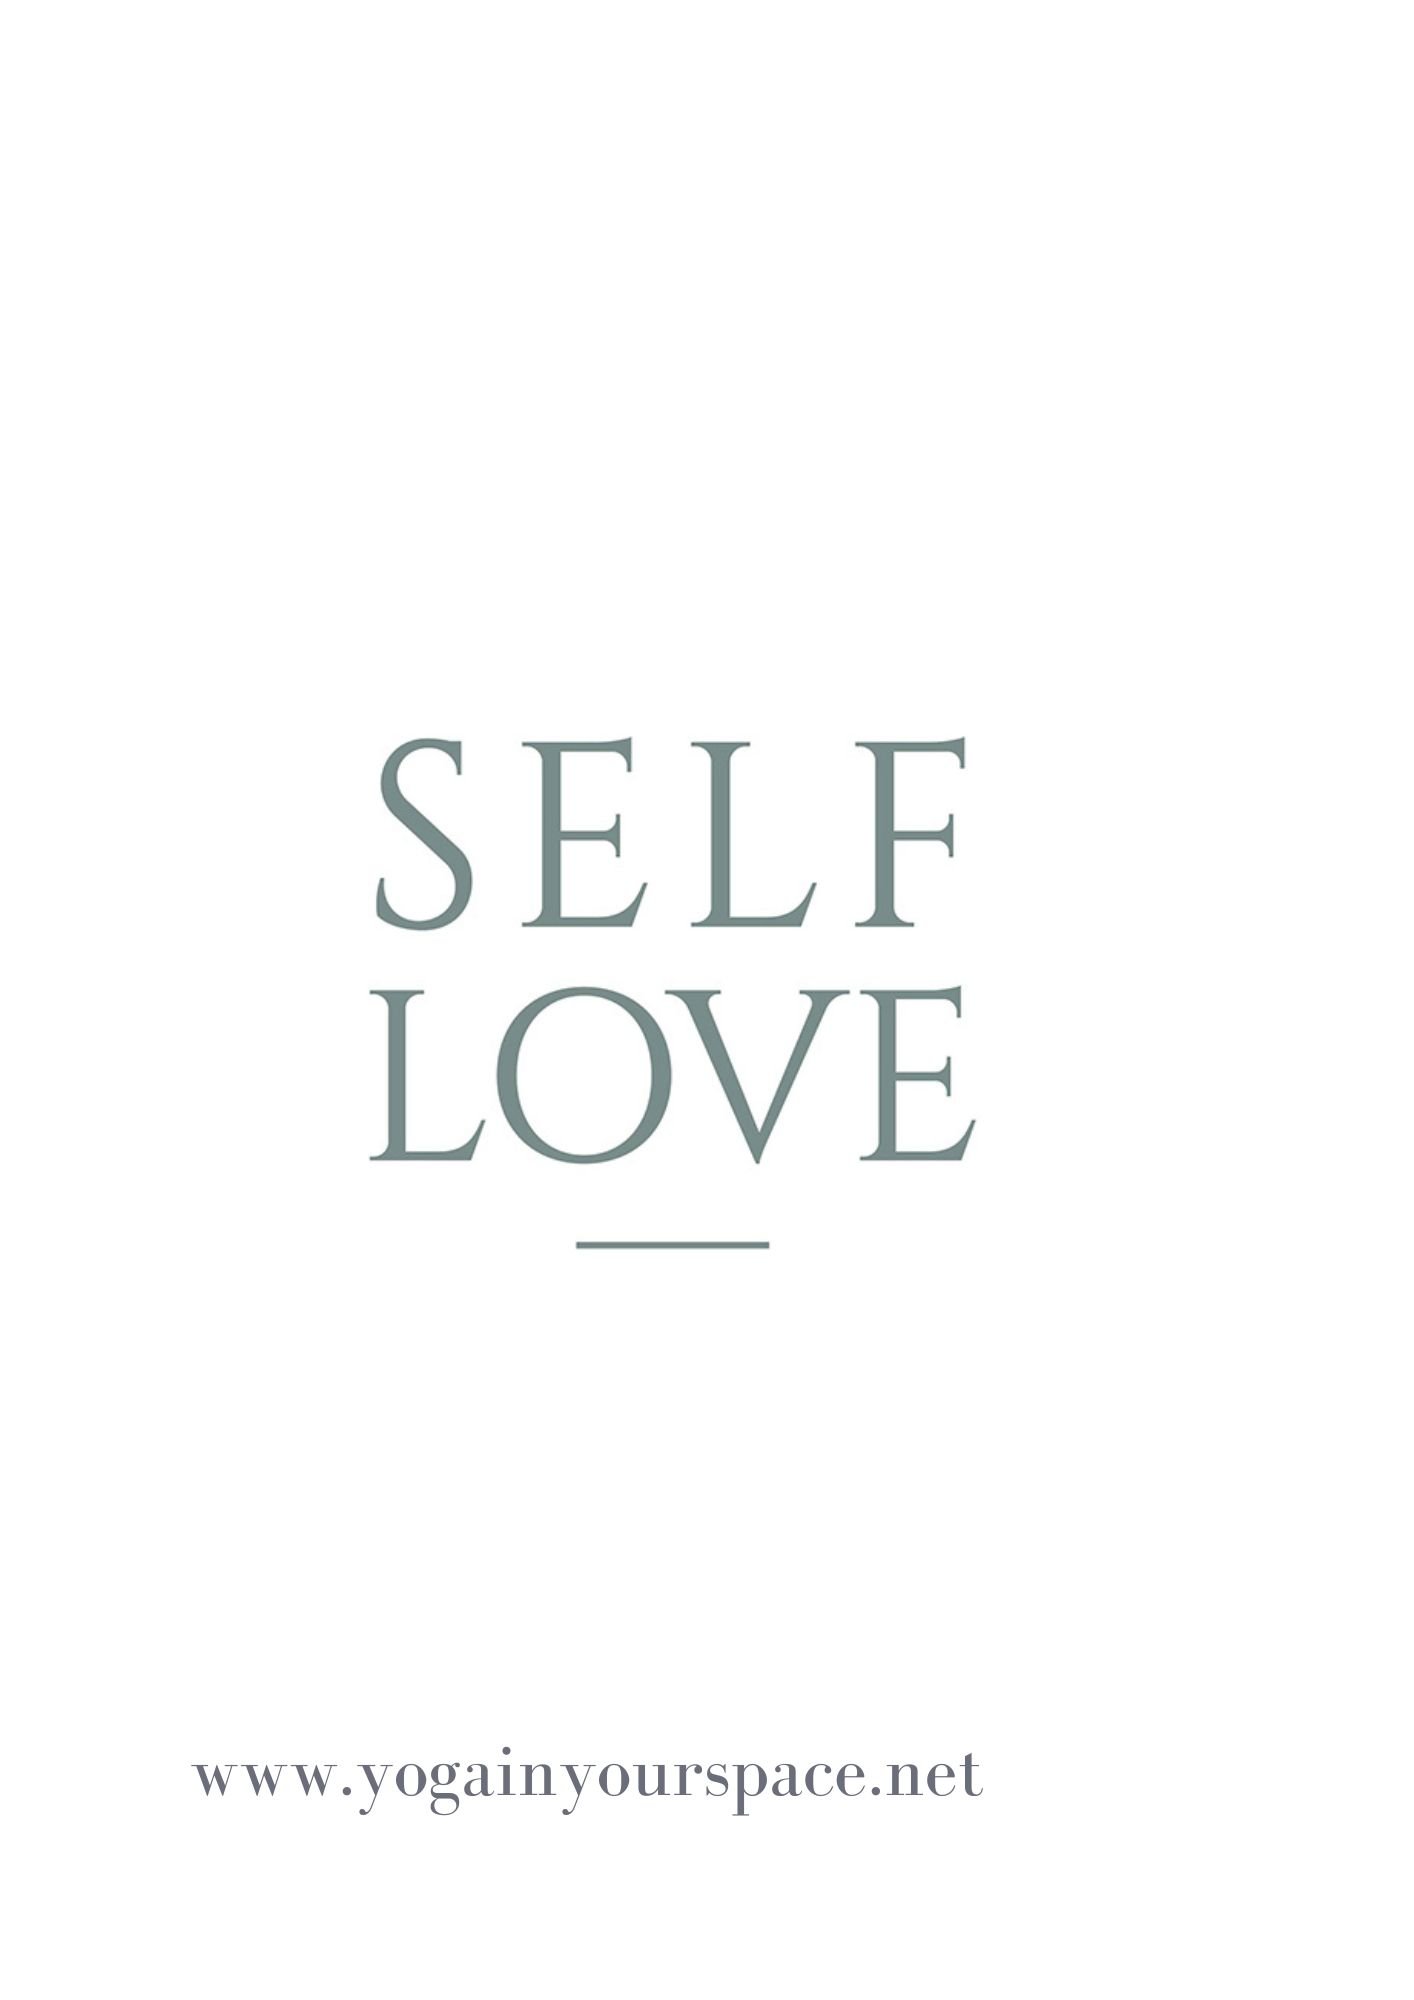 30 Day Self Love Challenge